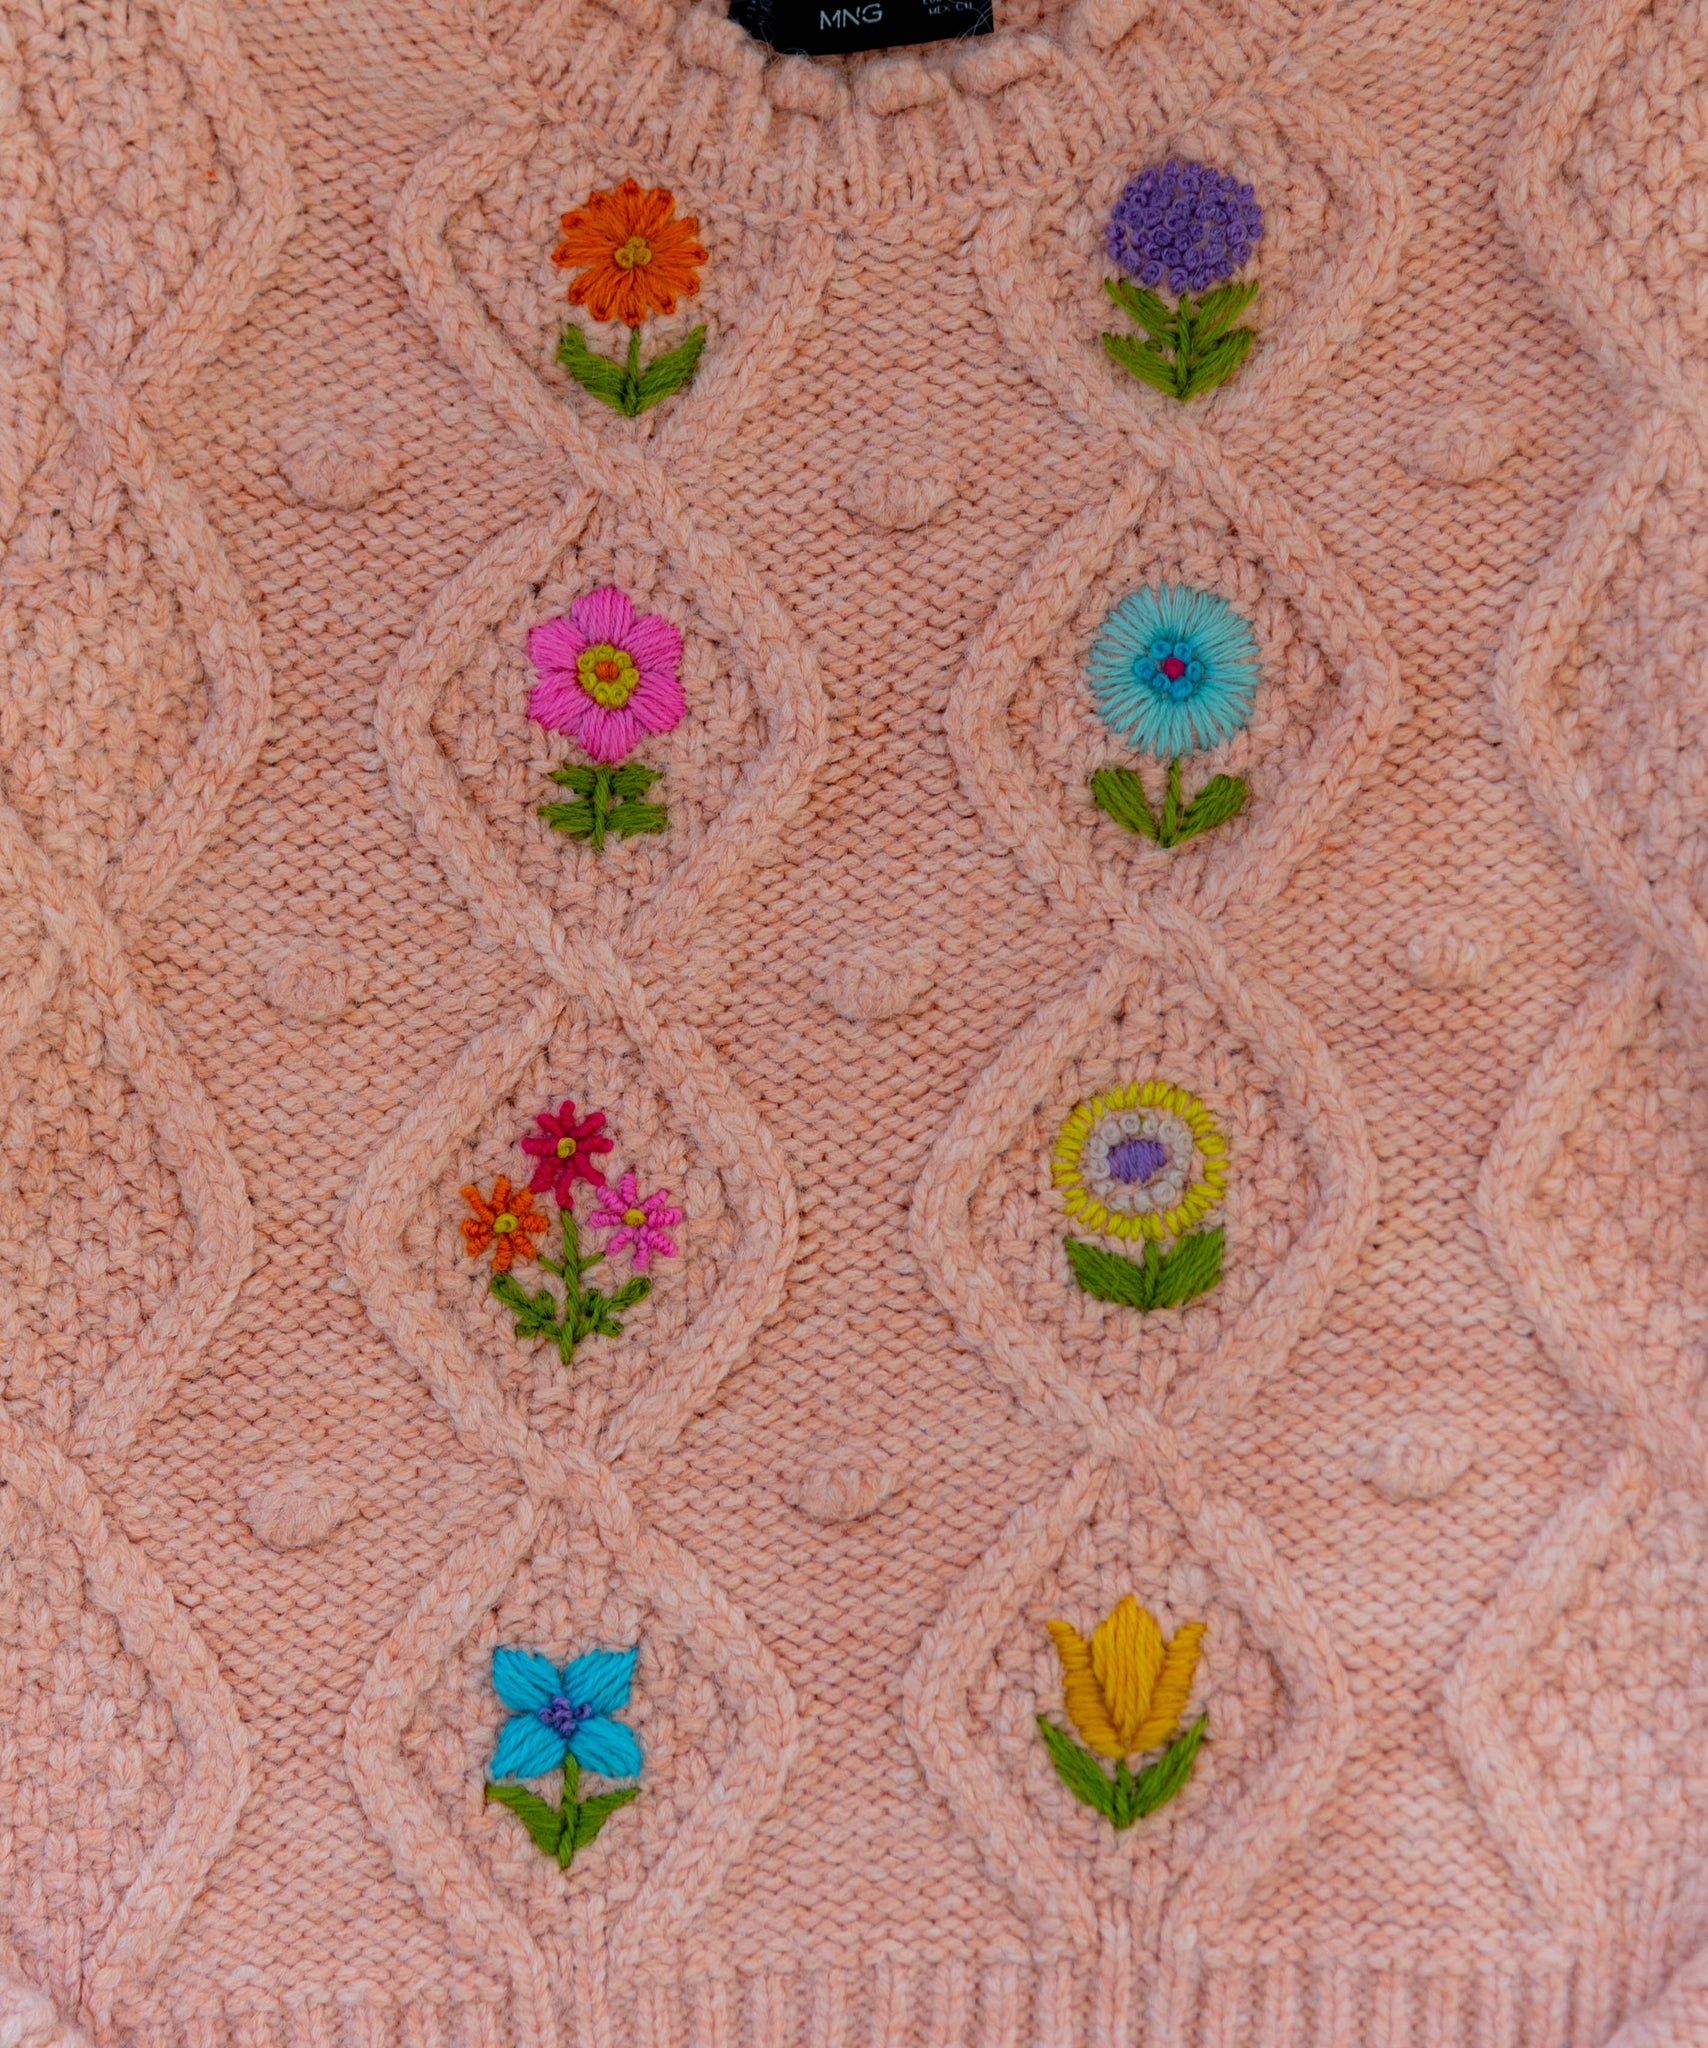 Embroidery Floss Drop Set - Scandi Flowers - Stitched Modern